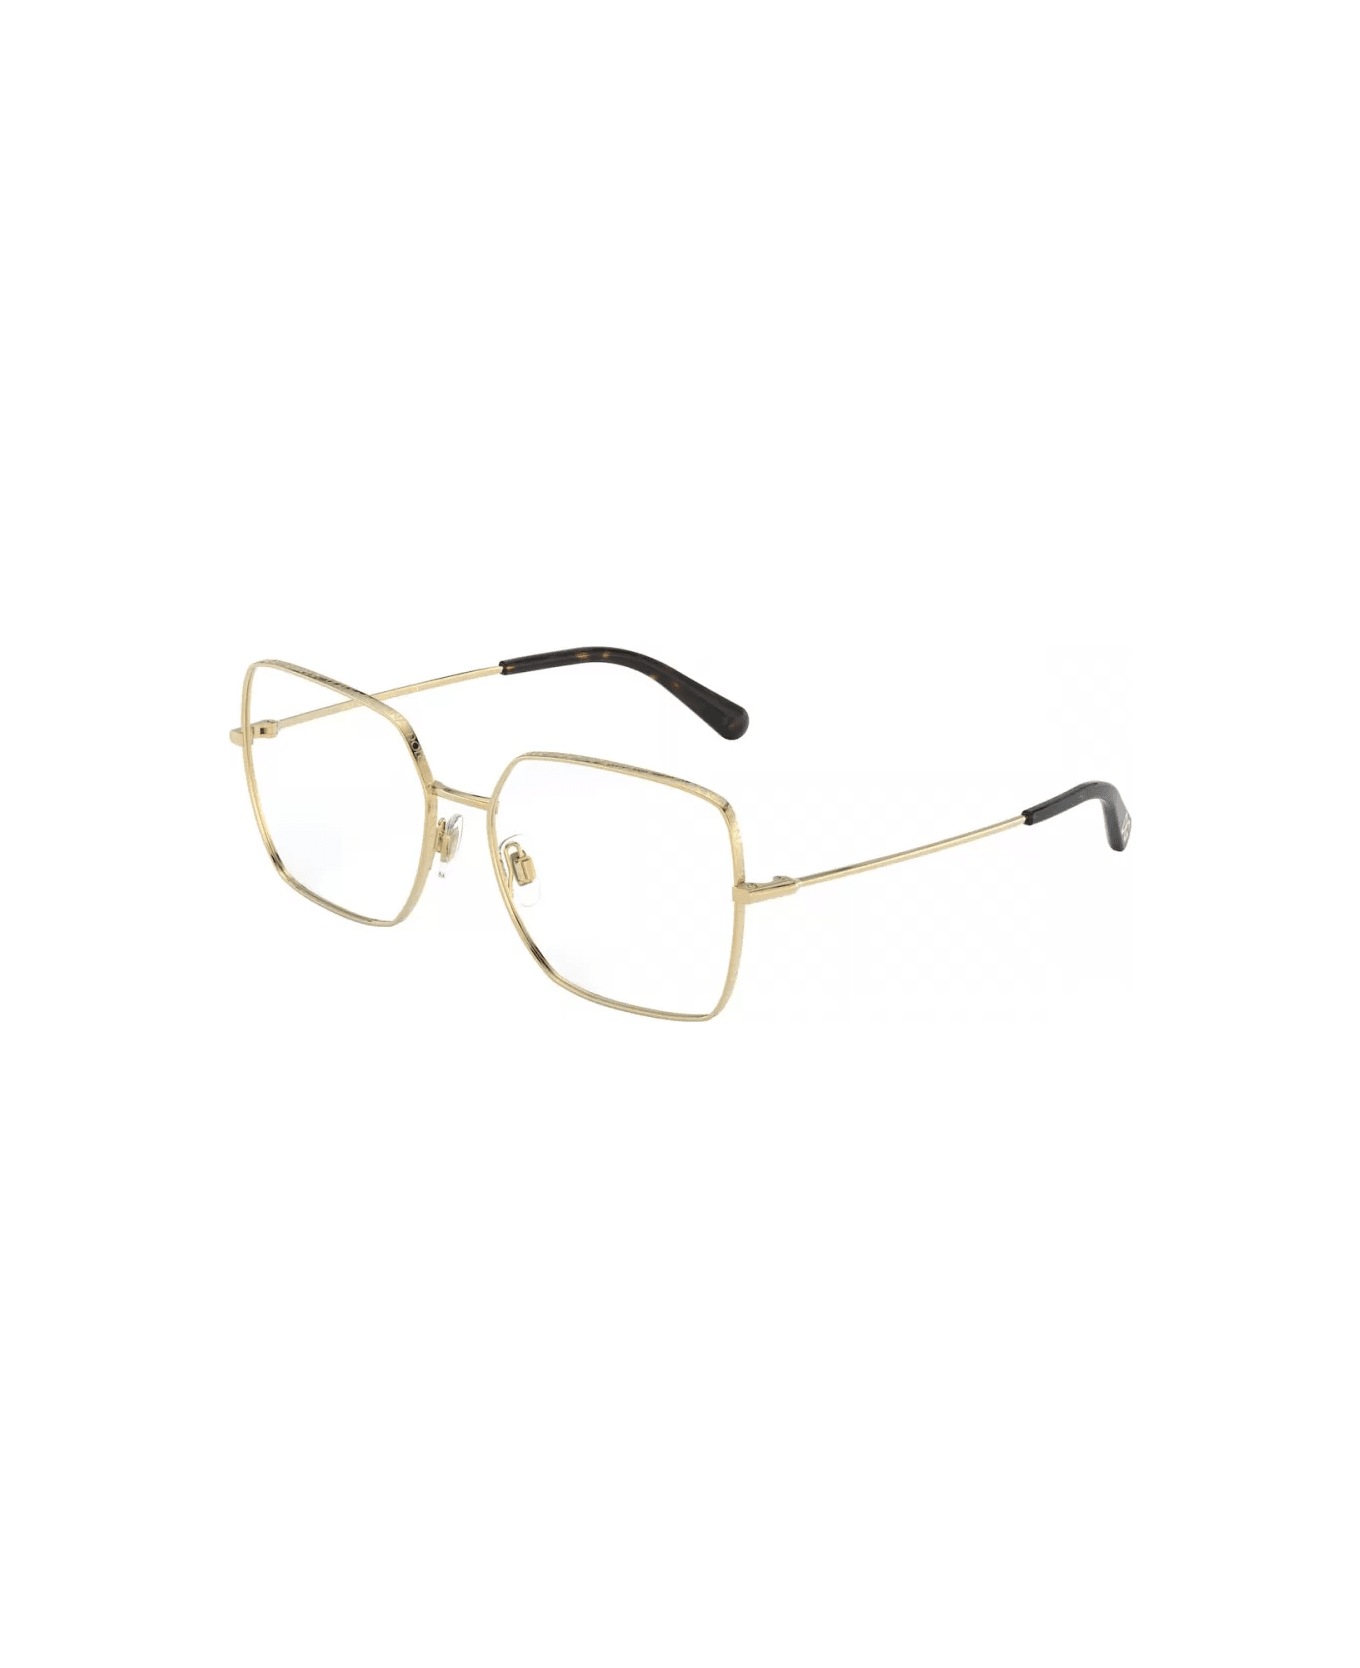 Dolce & Gabbana Eyewear DG1323 02 Glasses